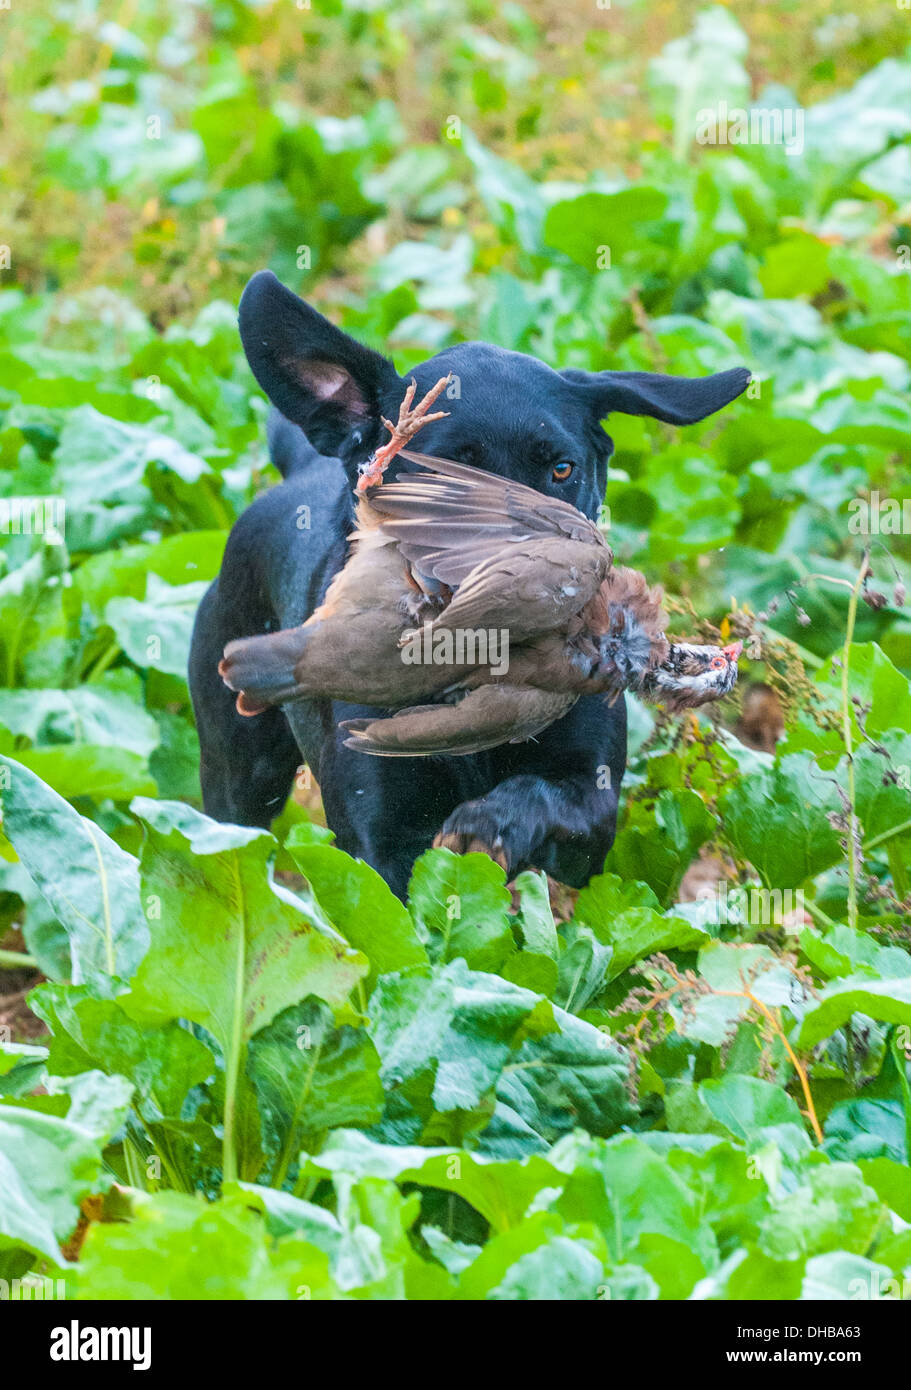 A gun dog, black labrador, retrieving a red partridge at a gun dog training day in field of sugar beet Stock Photo